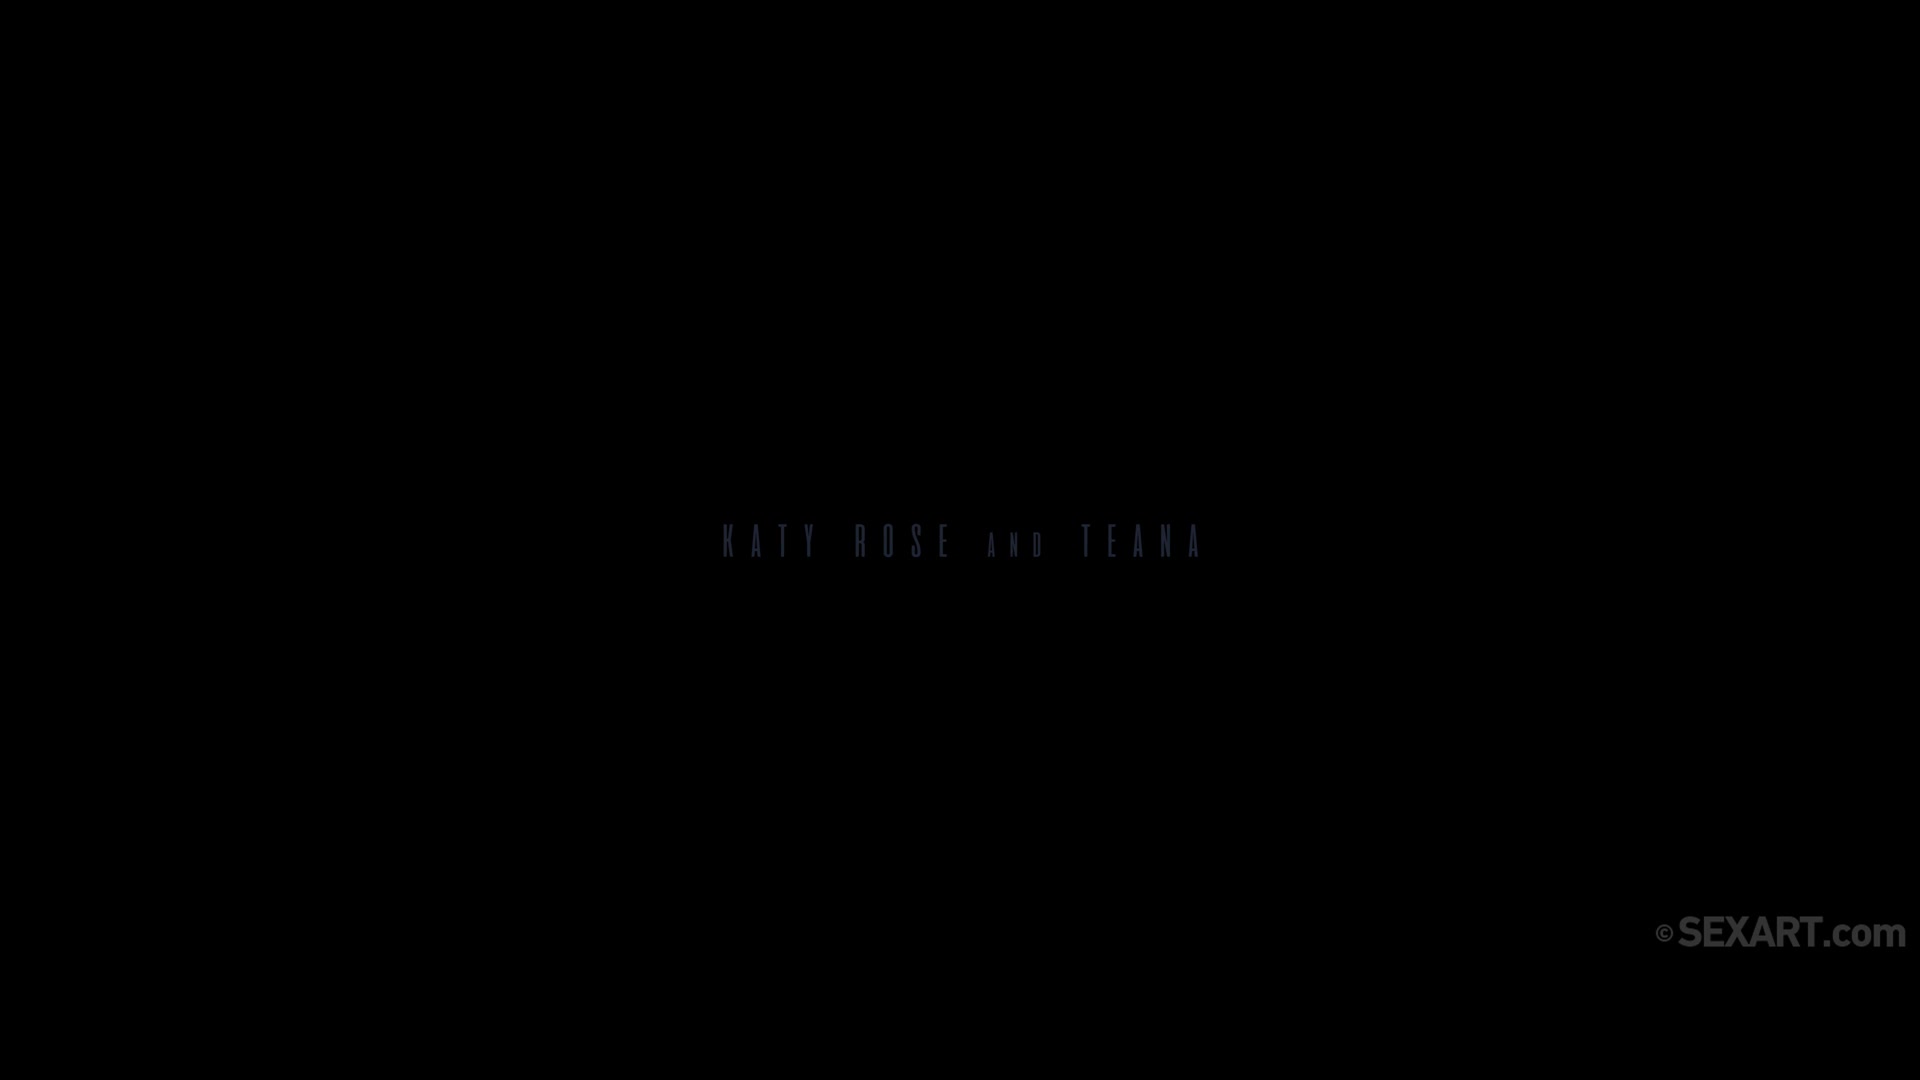 Katy Rose & Teana - Breathless 